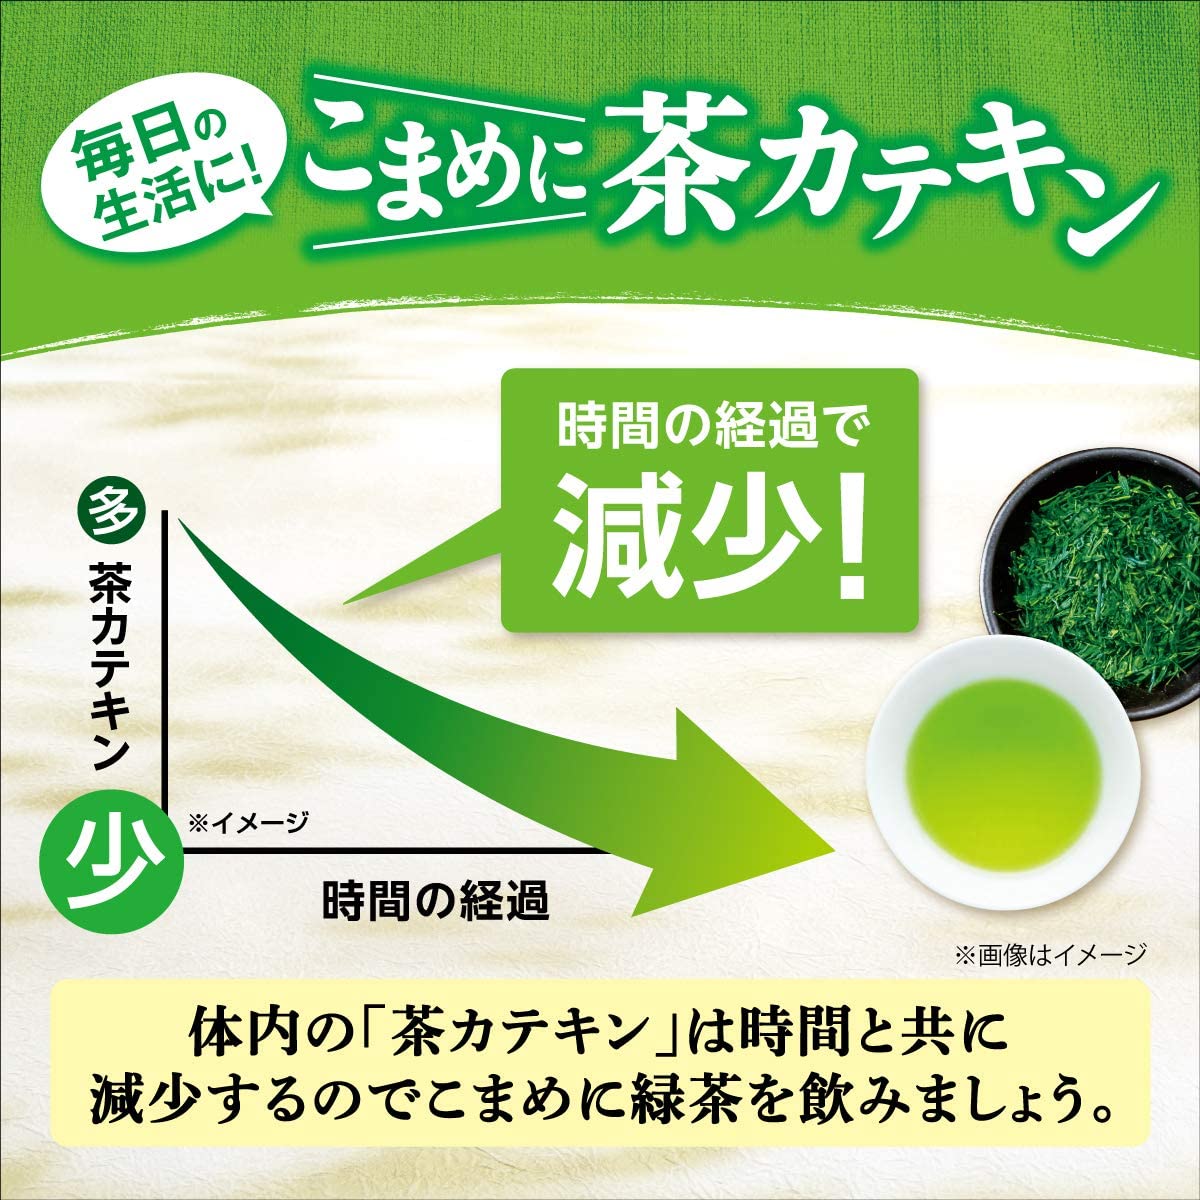 Itoen Premium tea bag deep steamed green tea 1.9g x 20 bags